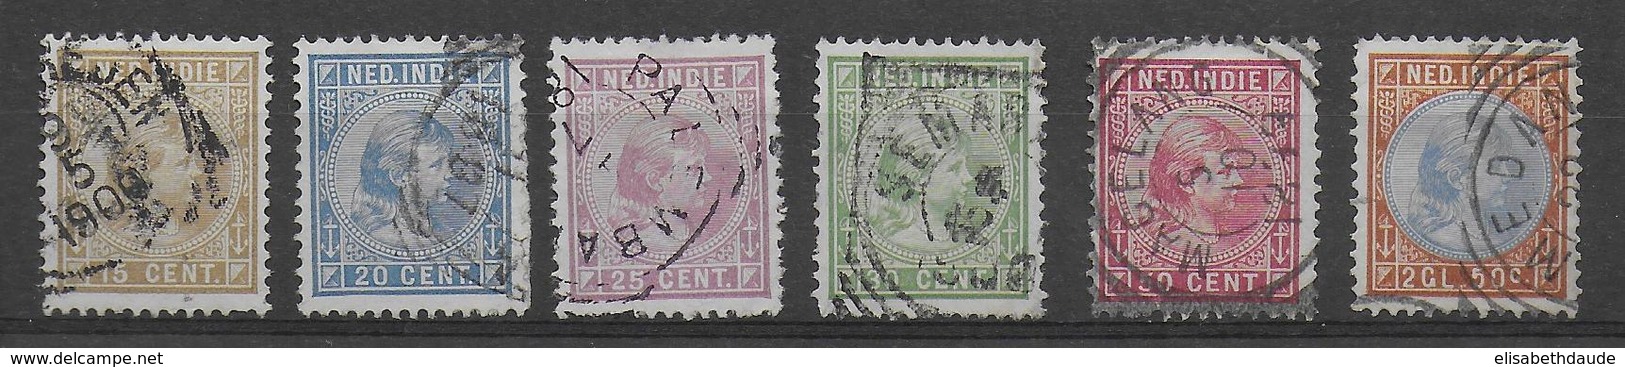 INDES NEERLANDAISES - 1891 - YT N° 25/30 OBLITERES - COTE = 65 EUR - Niederländisch-Indien